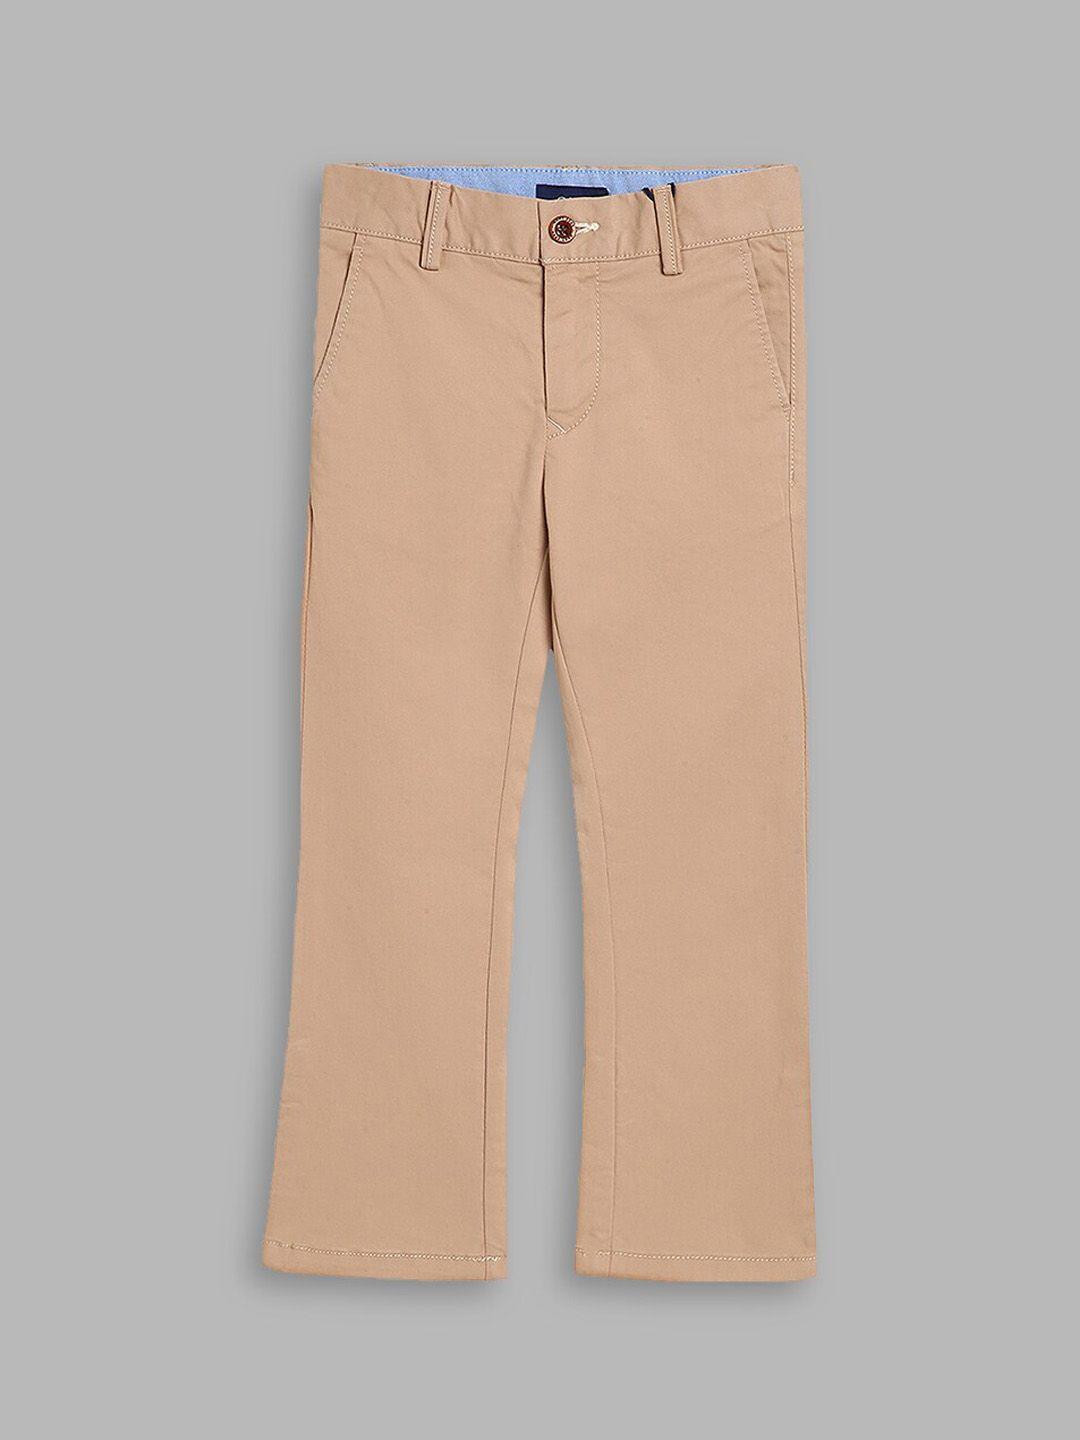 gant-boys-brown-cotton-trousers